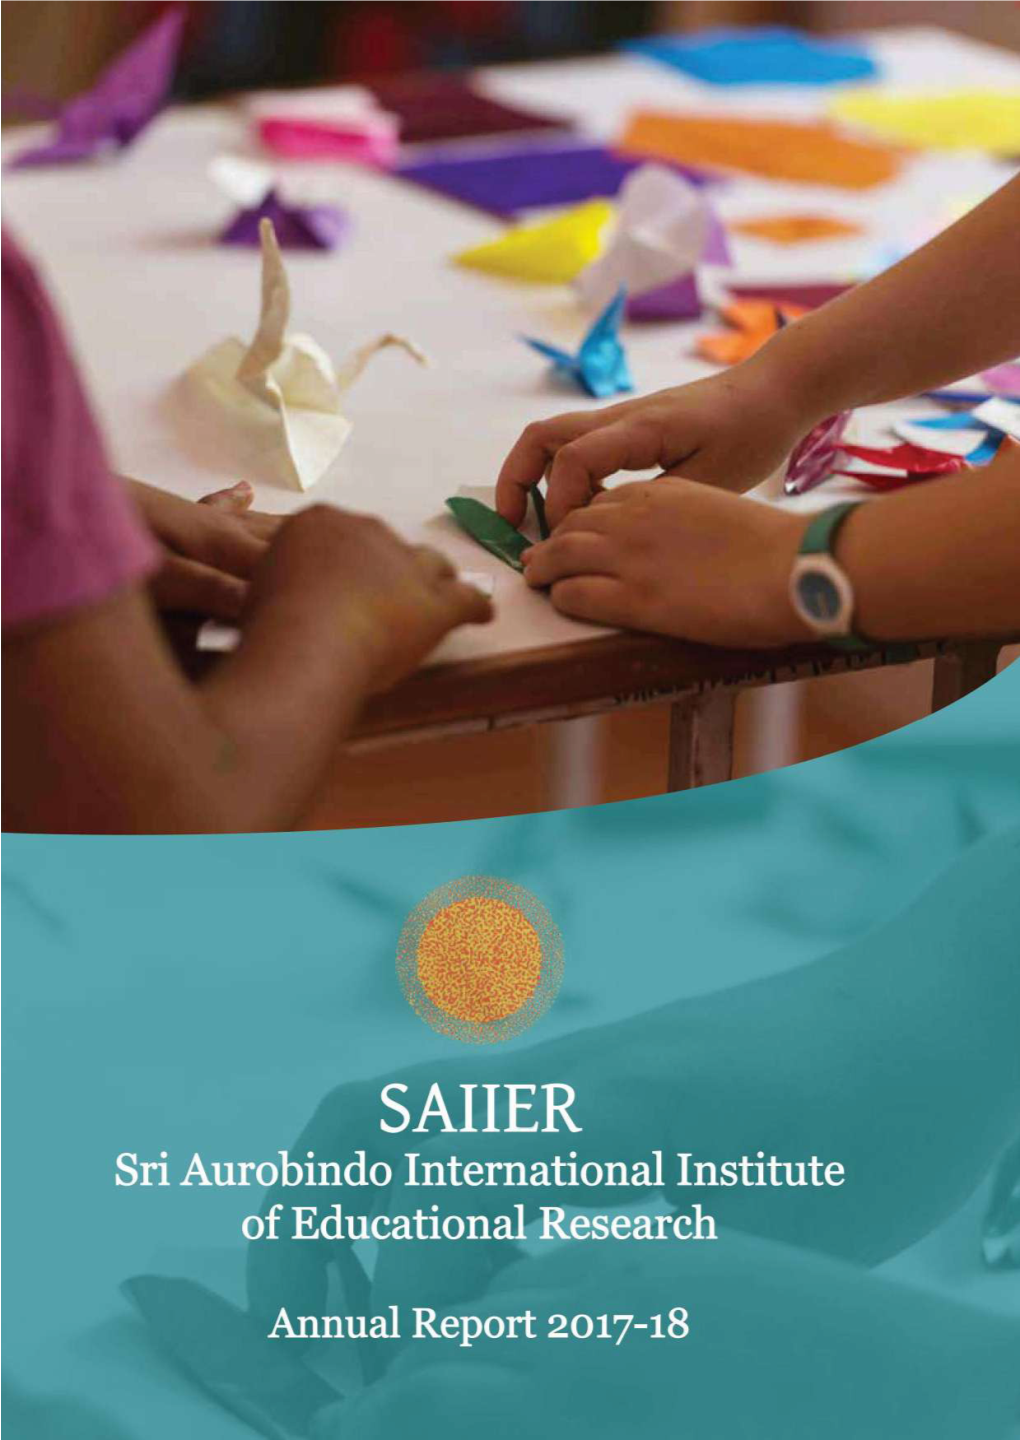 SAIIER Sri Aurobindo International Institute of Educational Research Annual Report 2017-18